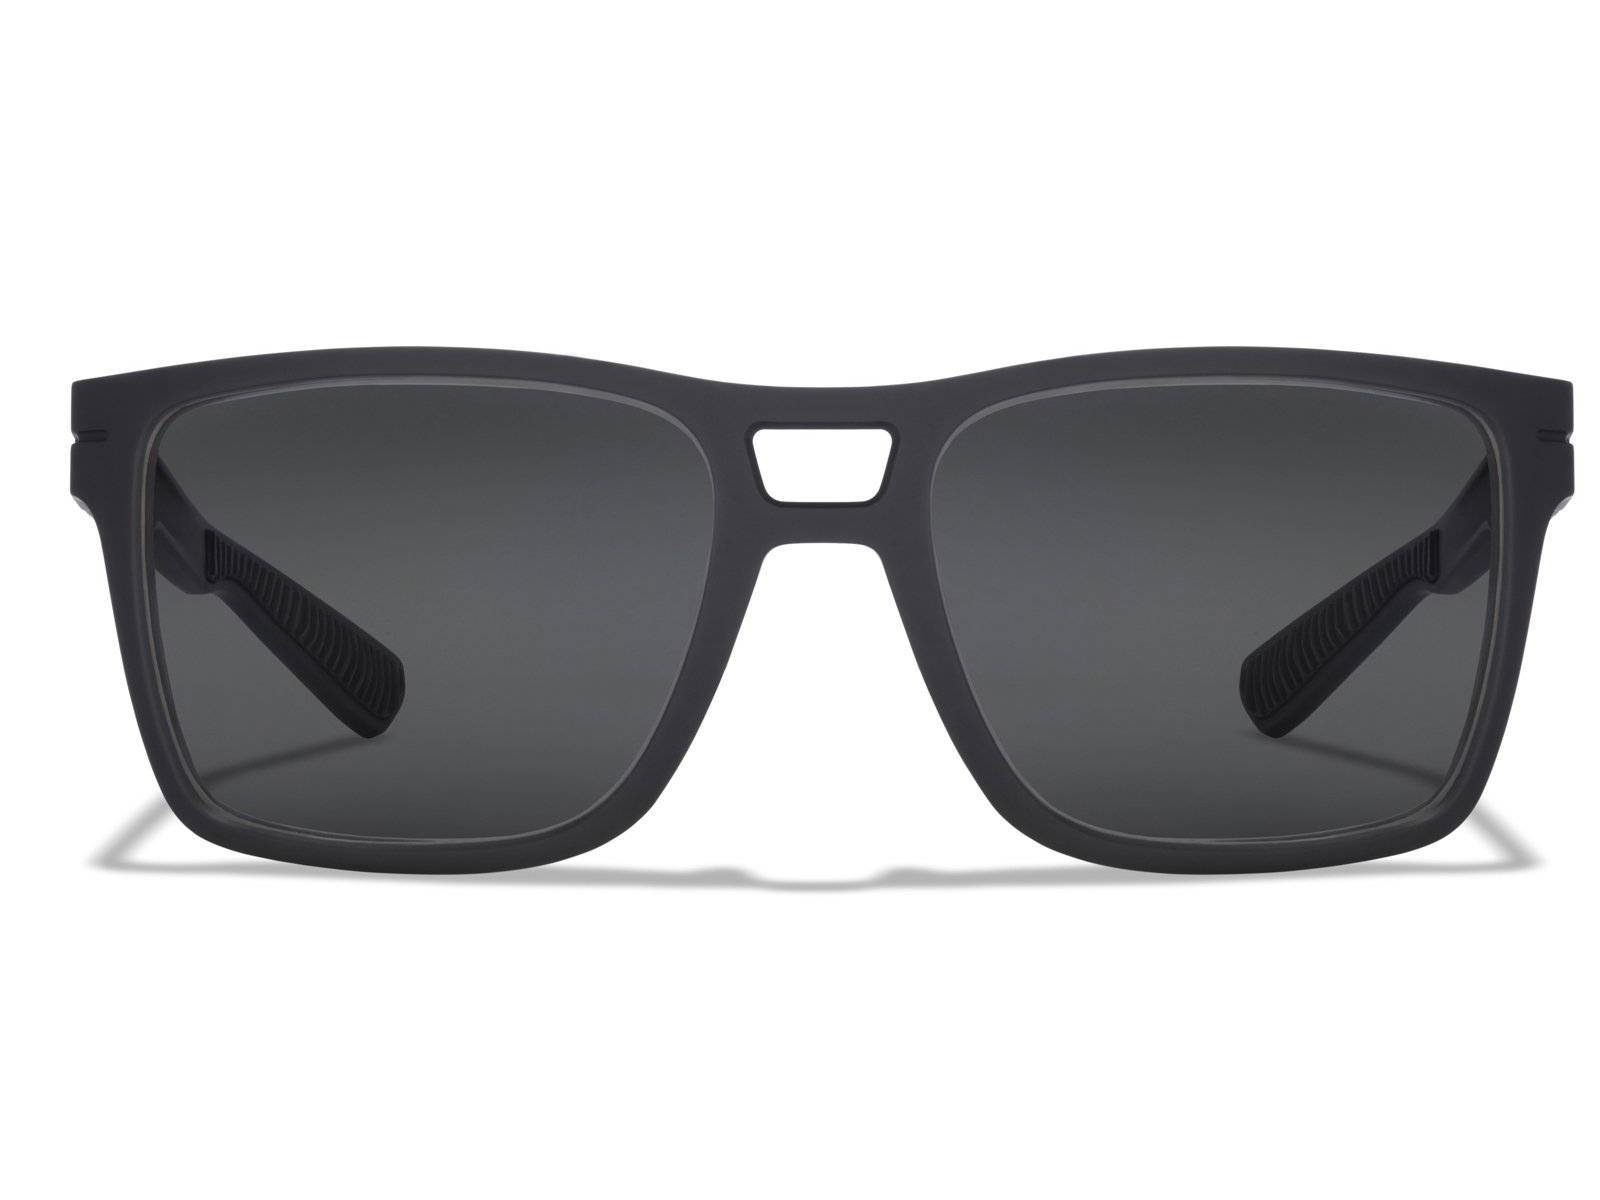 Roka Kona Prescription Sunglasses with Dark Glacier Mirrors (Matte Black/Black)